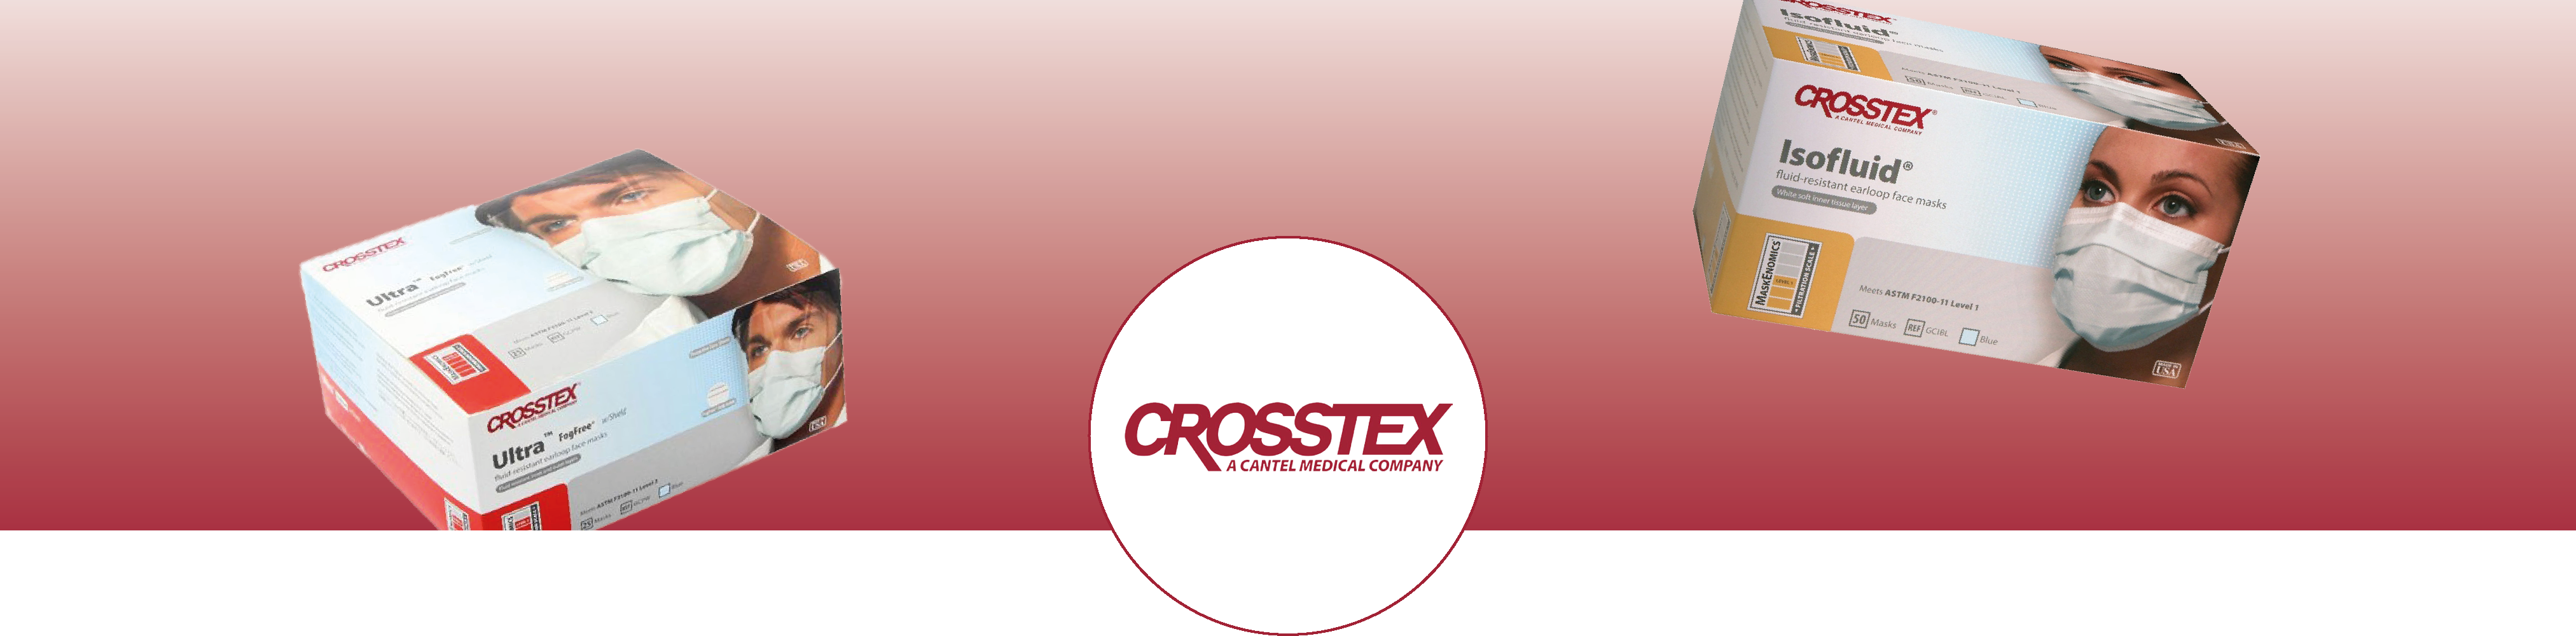 banner_crosstex